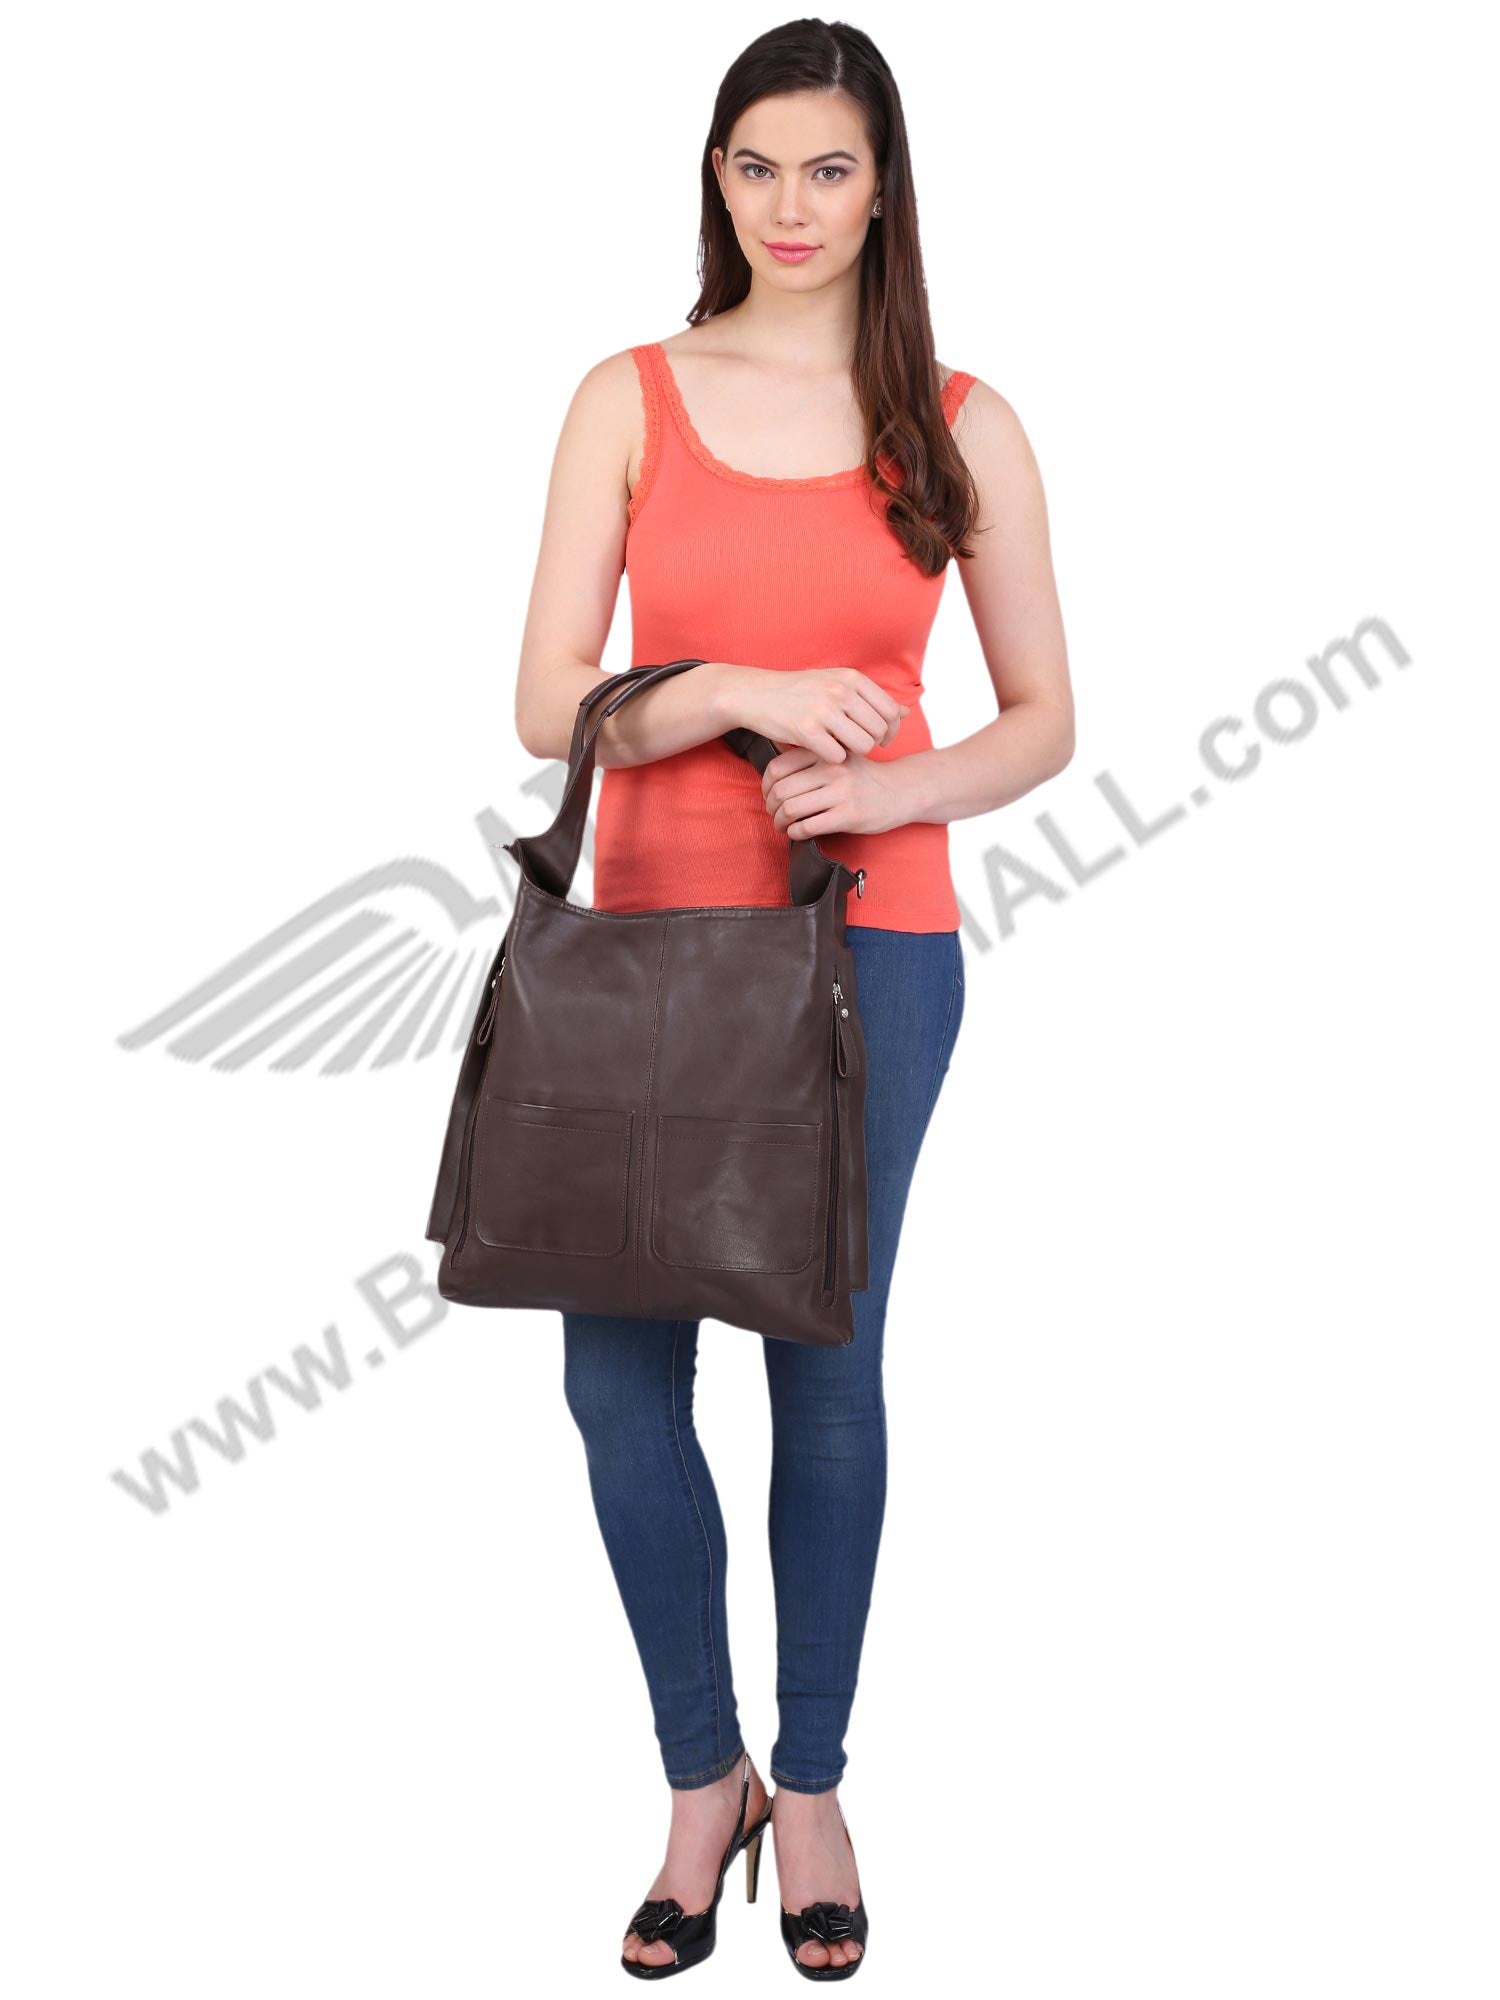 Model has held FER GAMO HAND BAG.  It is quiet stylish